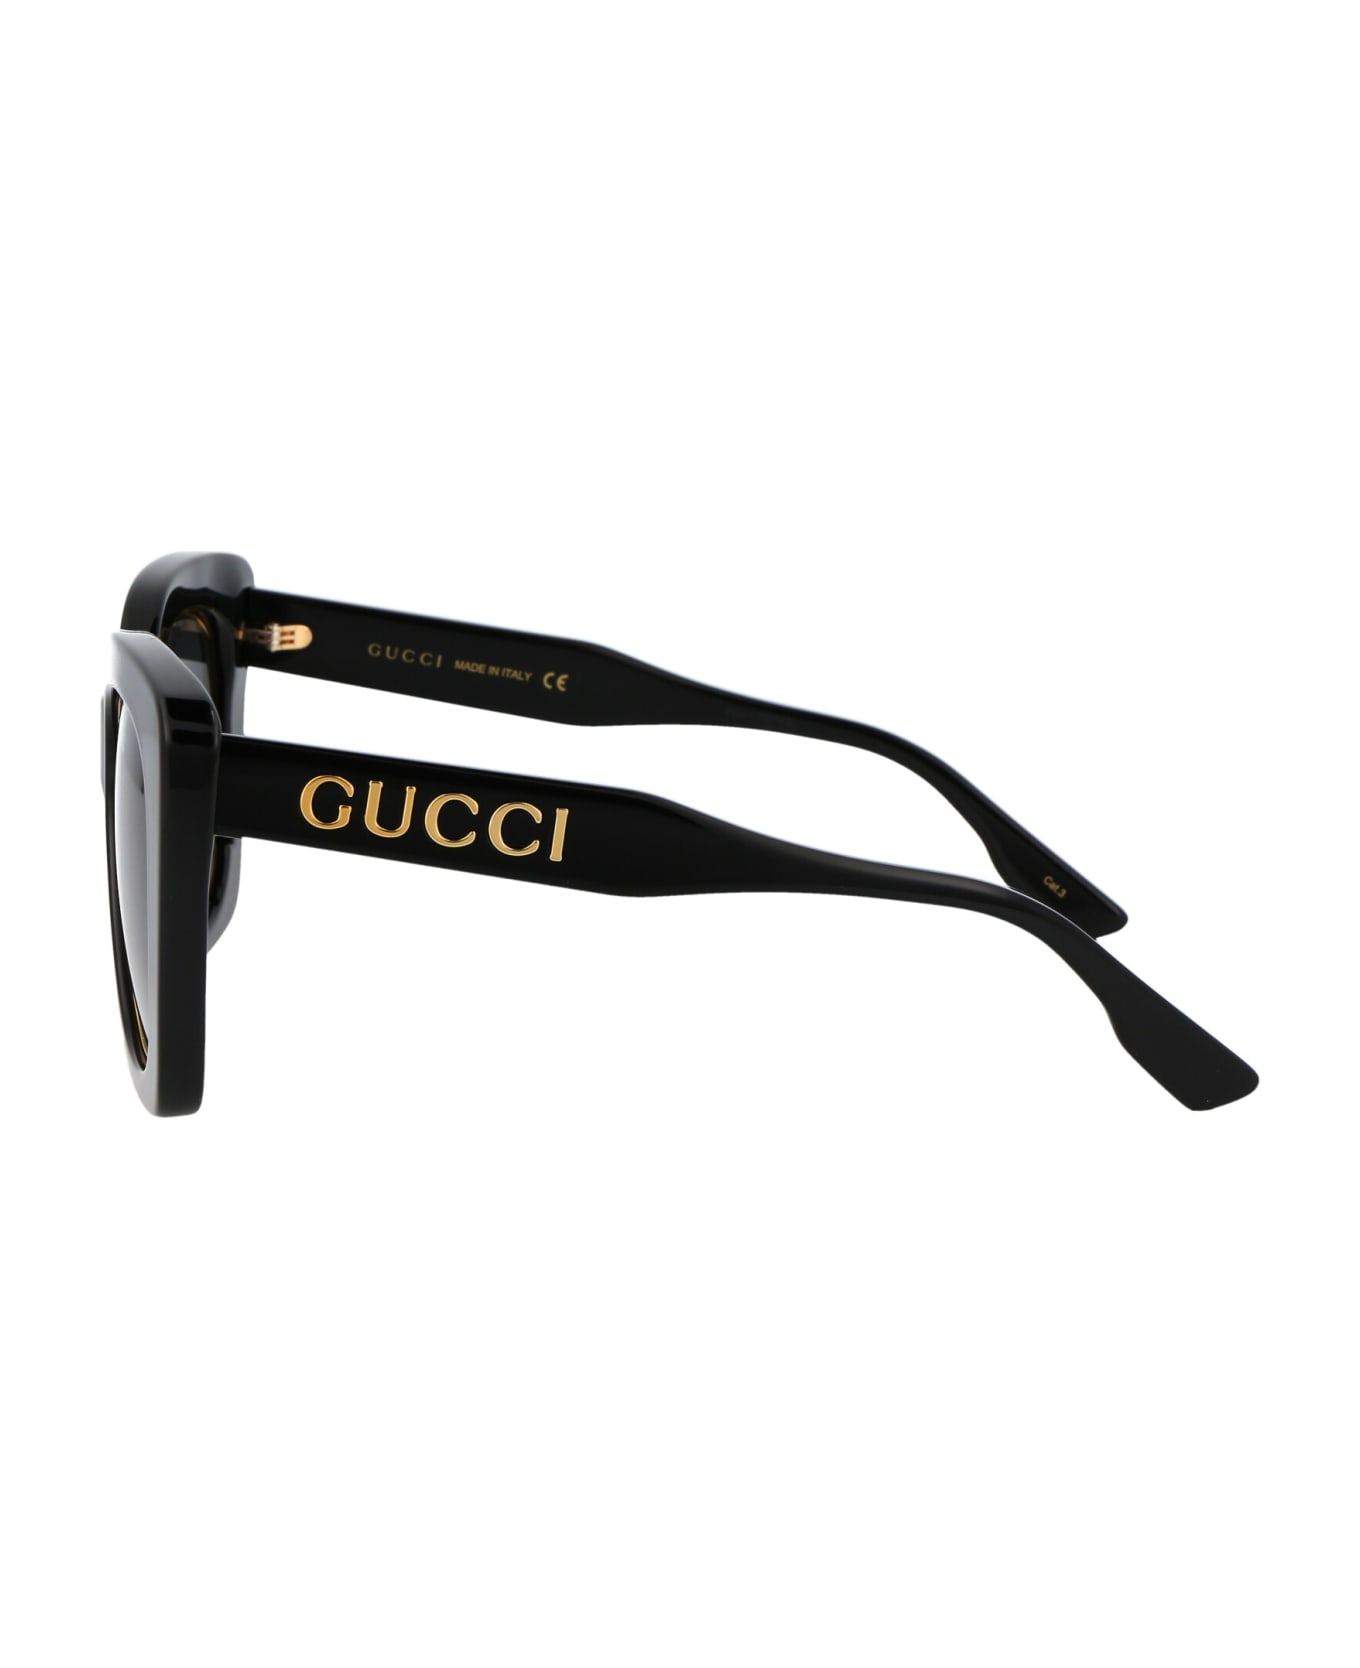 Gucci Eyewear Gg1151s Sunglasses - 001 BLACK BLACK GREY